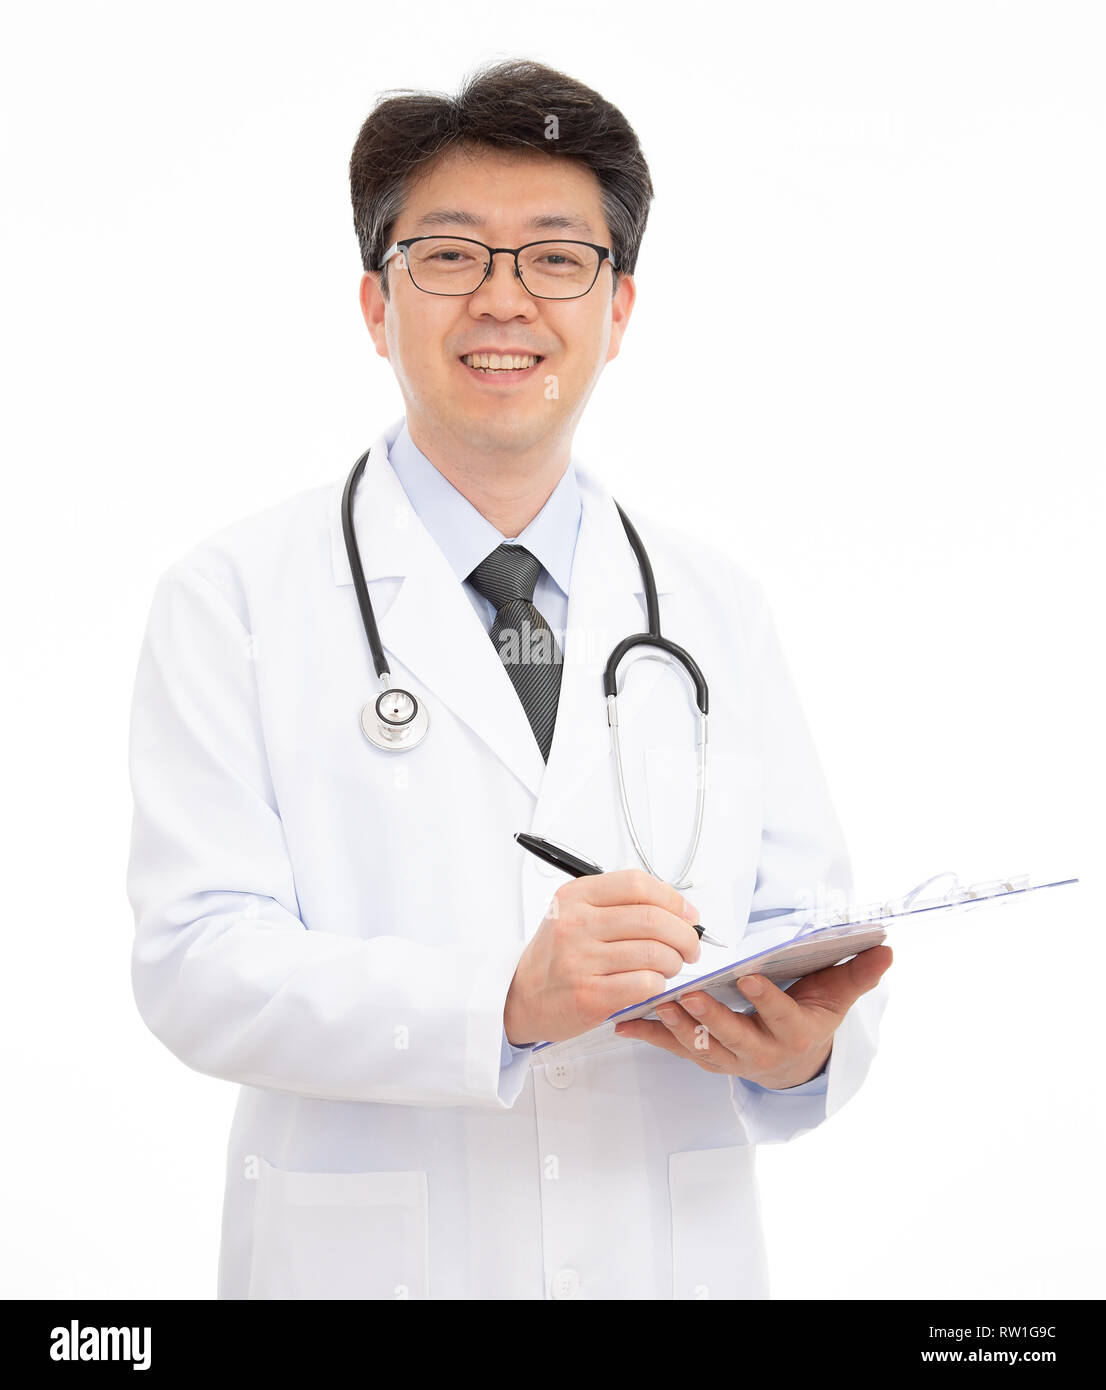 Врачи азиаты. Доктор Азиат. Врач казах. Азиат мужчина у доктора. Казахский врач на белом фоне.